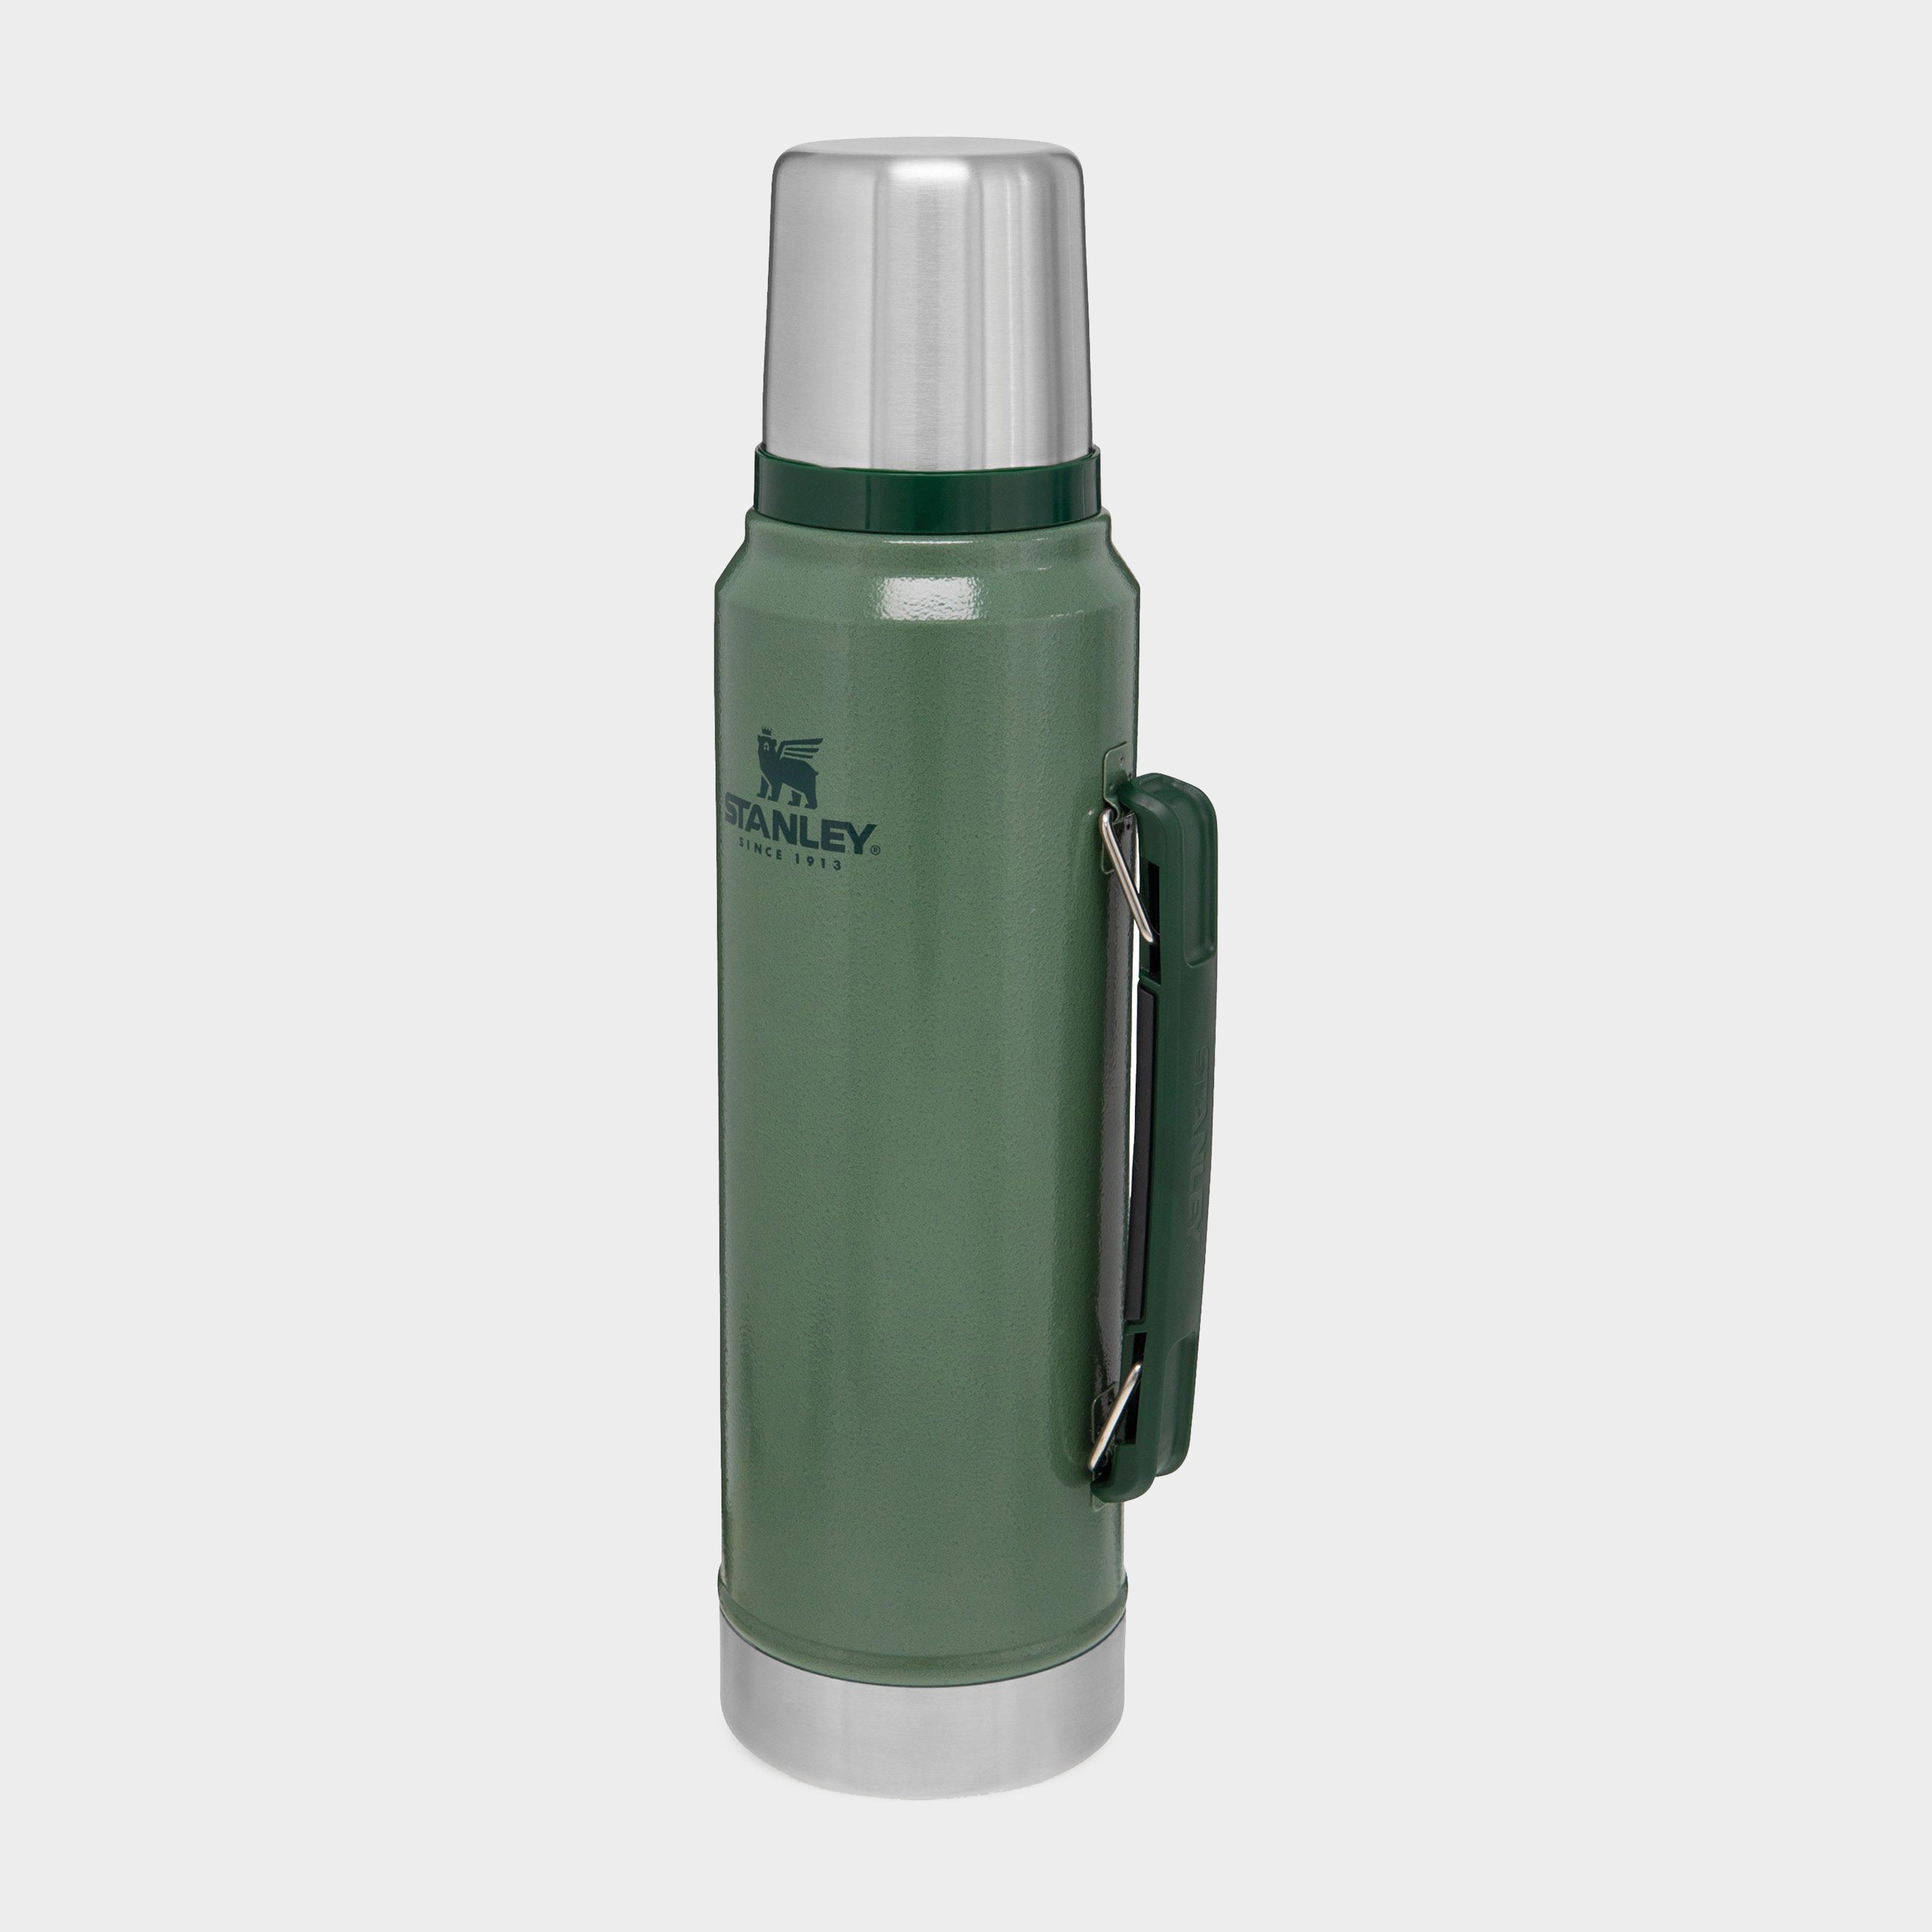 Stanley Stanley Classic Vacuum Bottle 1.0L - Green, GREEN